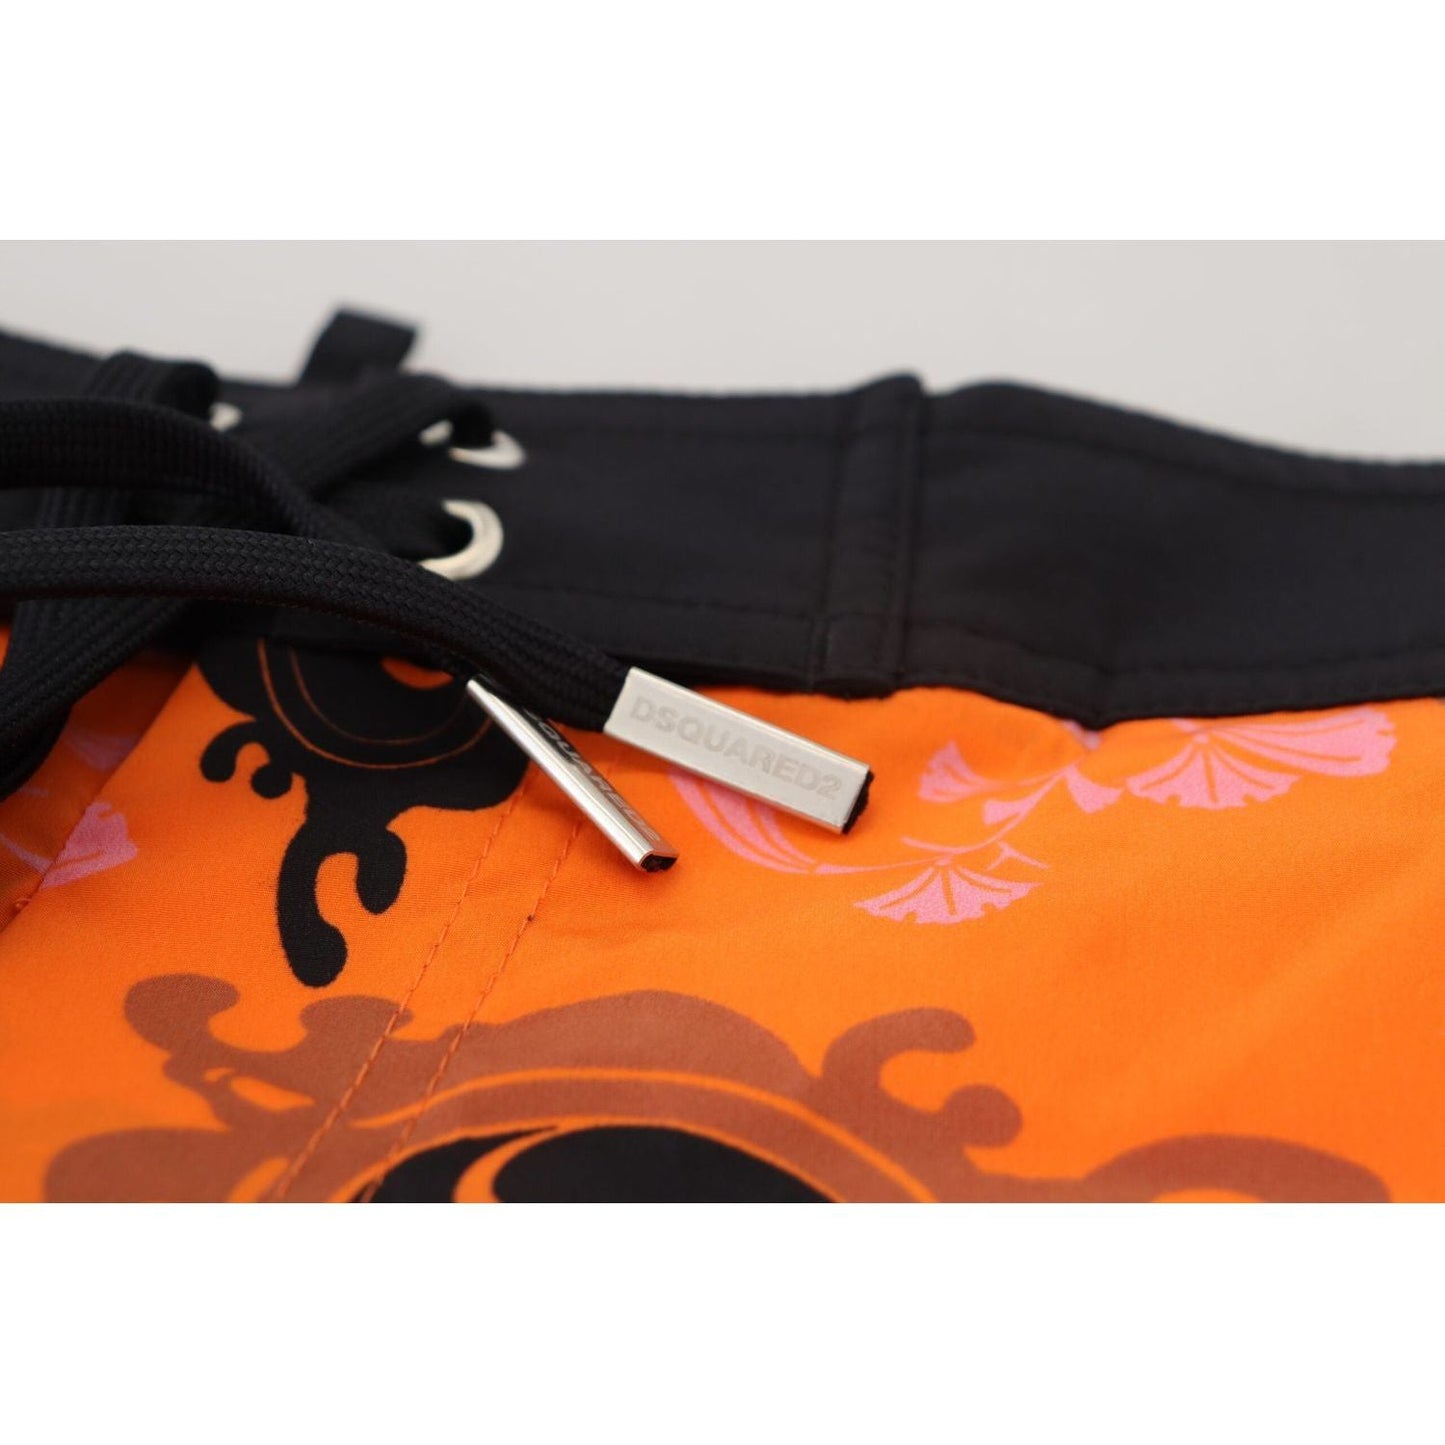 Dsquared² Chic Orange Swim Shorts Boxer for Men orange-black-printed-men-beachwear-shorts-swimwear IMG_6065-scaled-d898e374-1cd.jpg